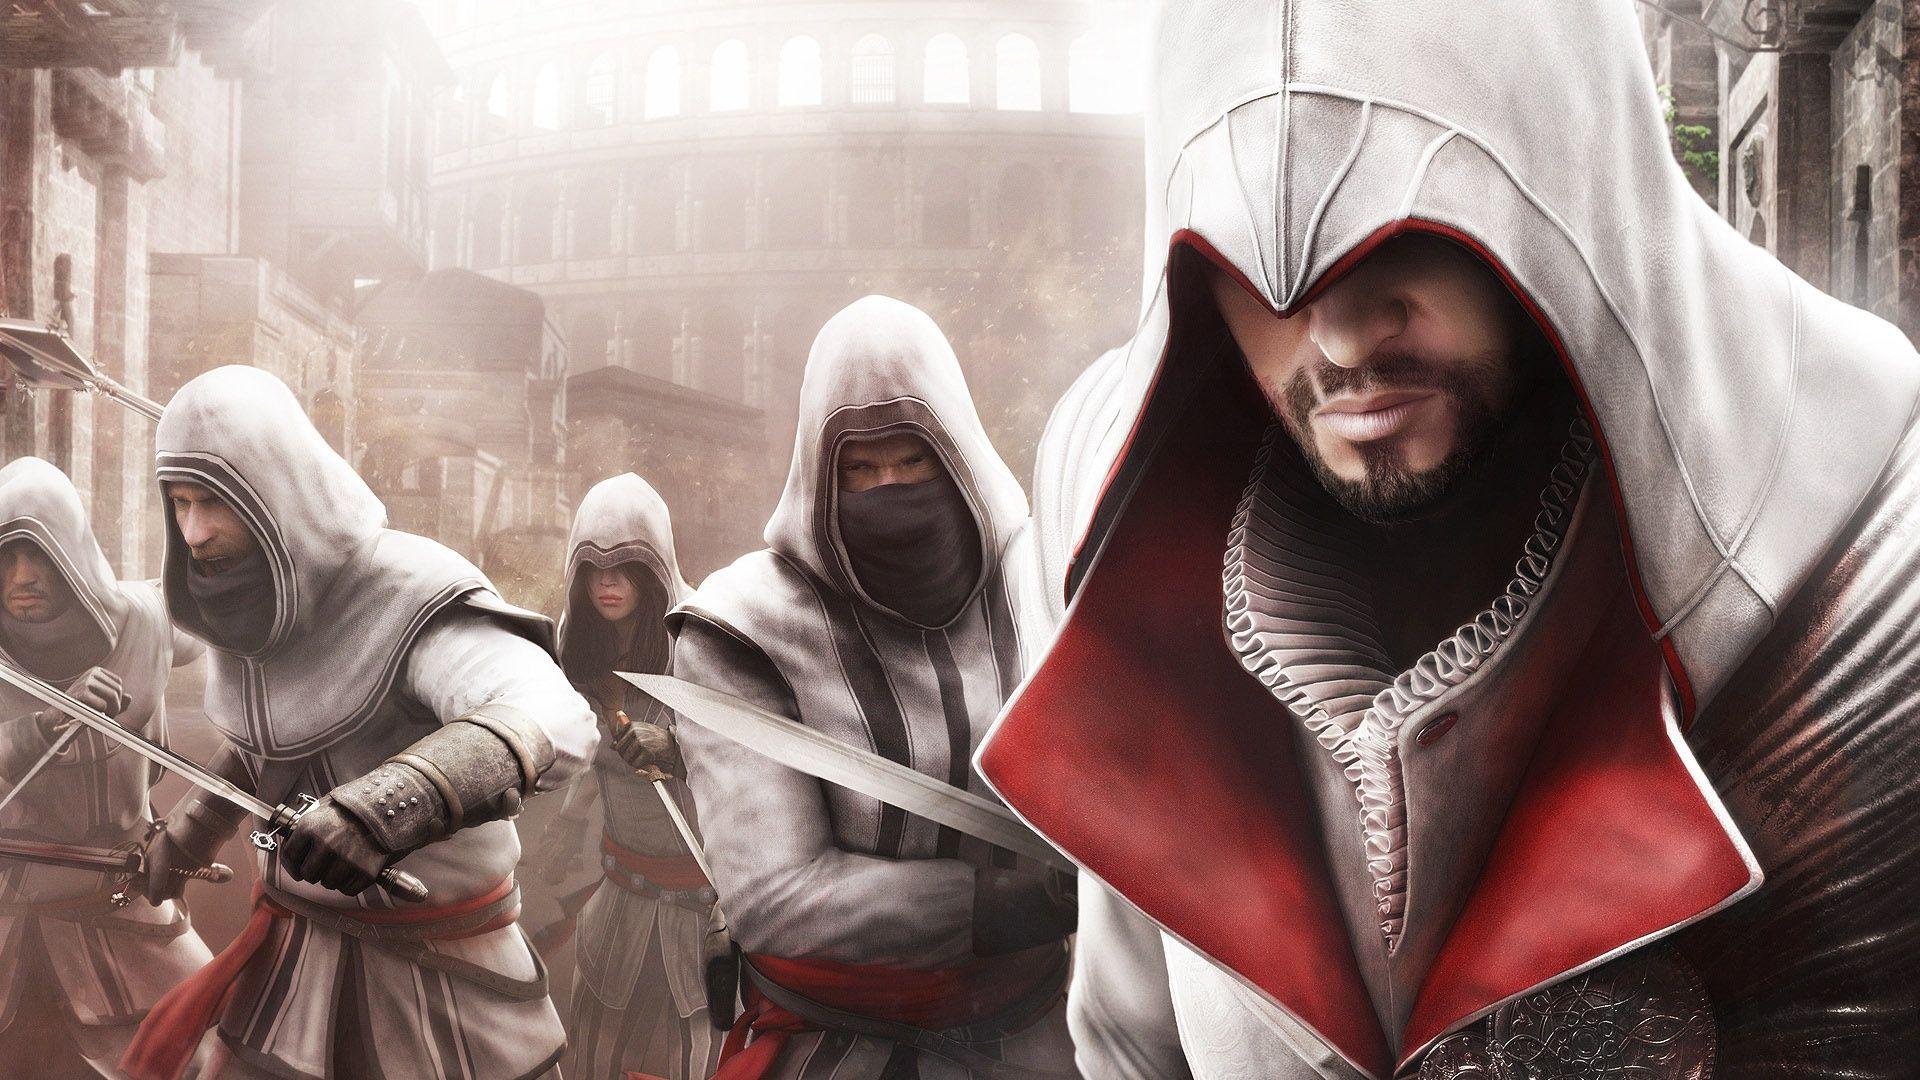 Ezio Auditore da Firenze. Assassin's creed brotherhood